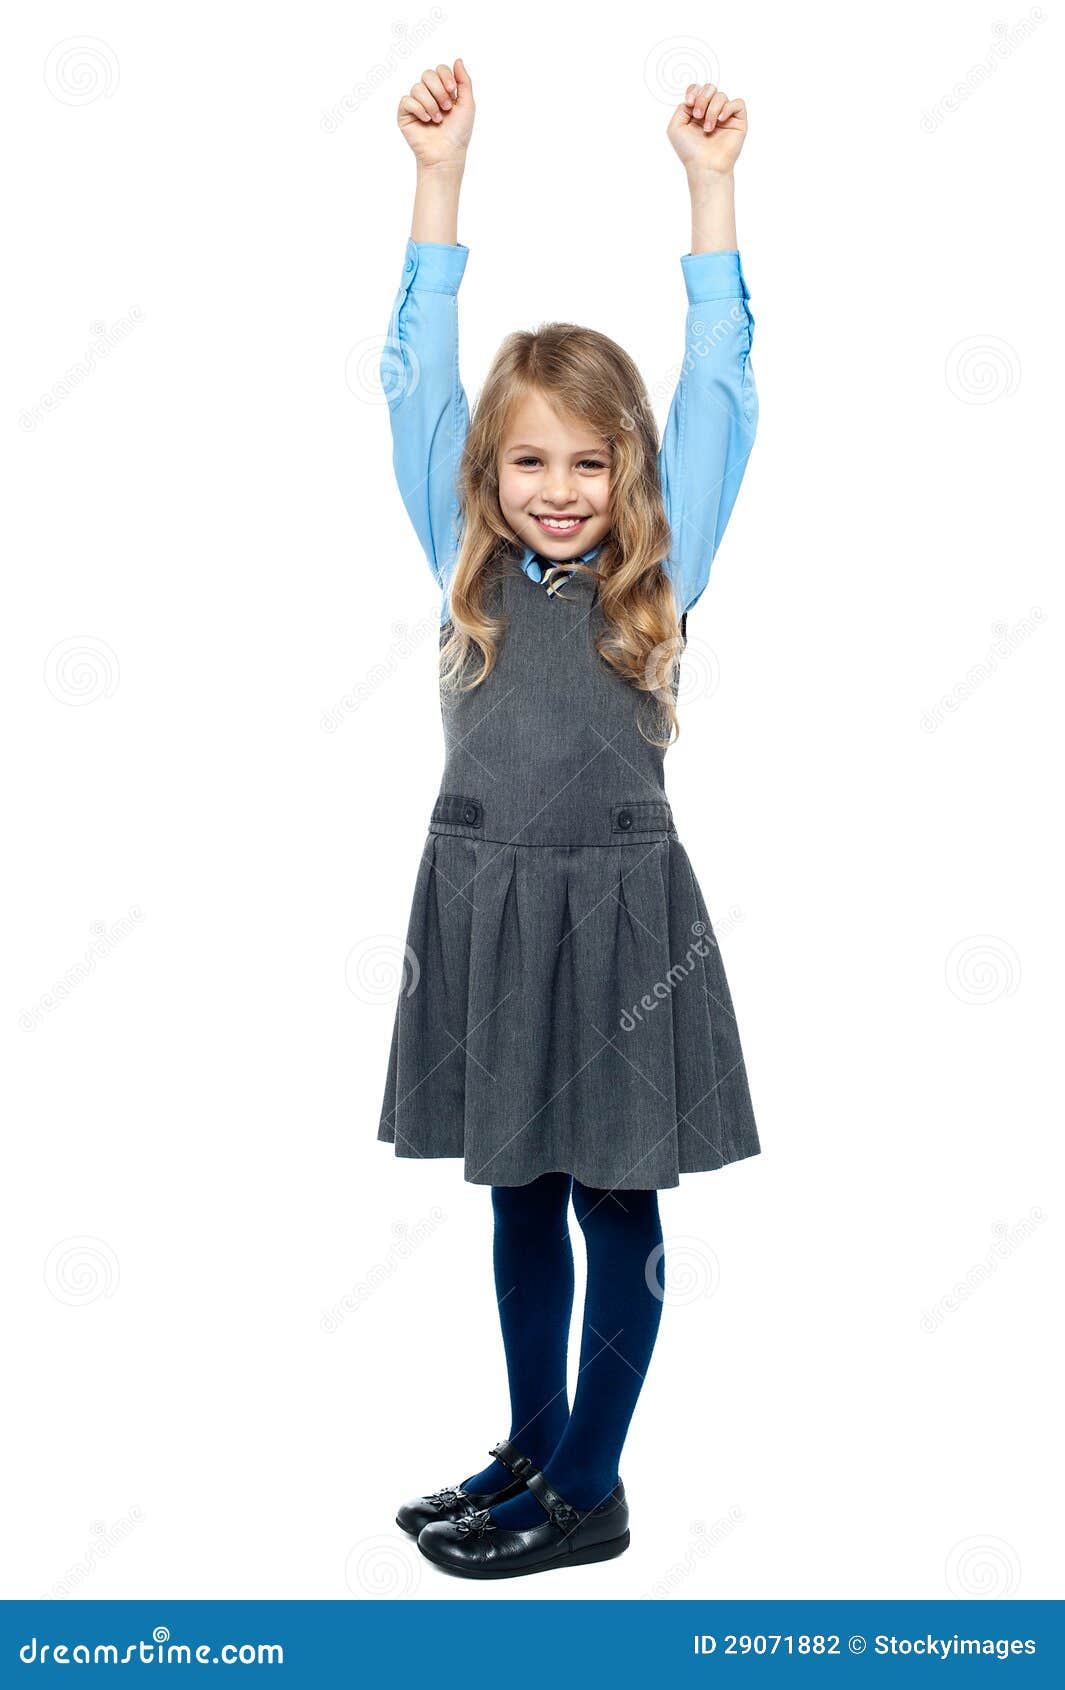 cheerful kid raising her hands in excitement